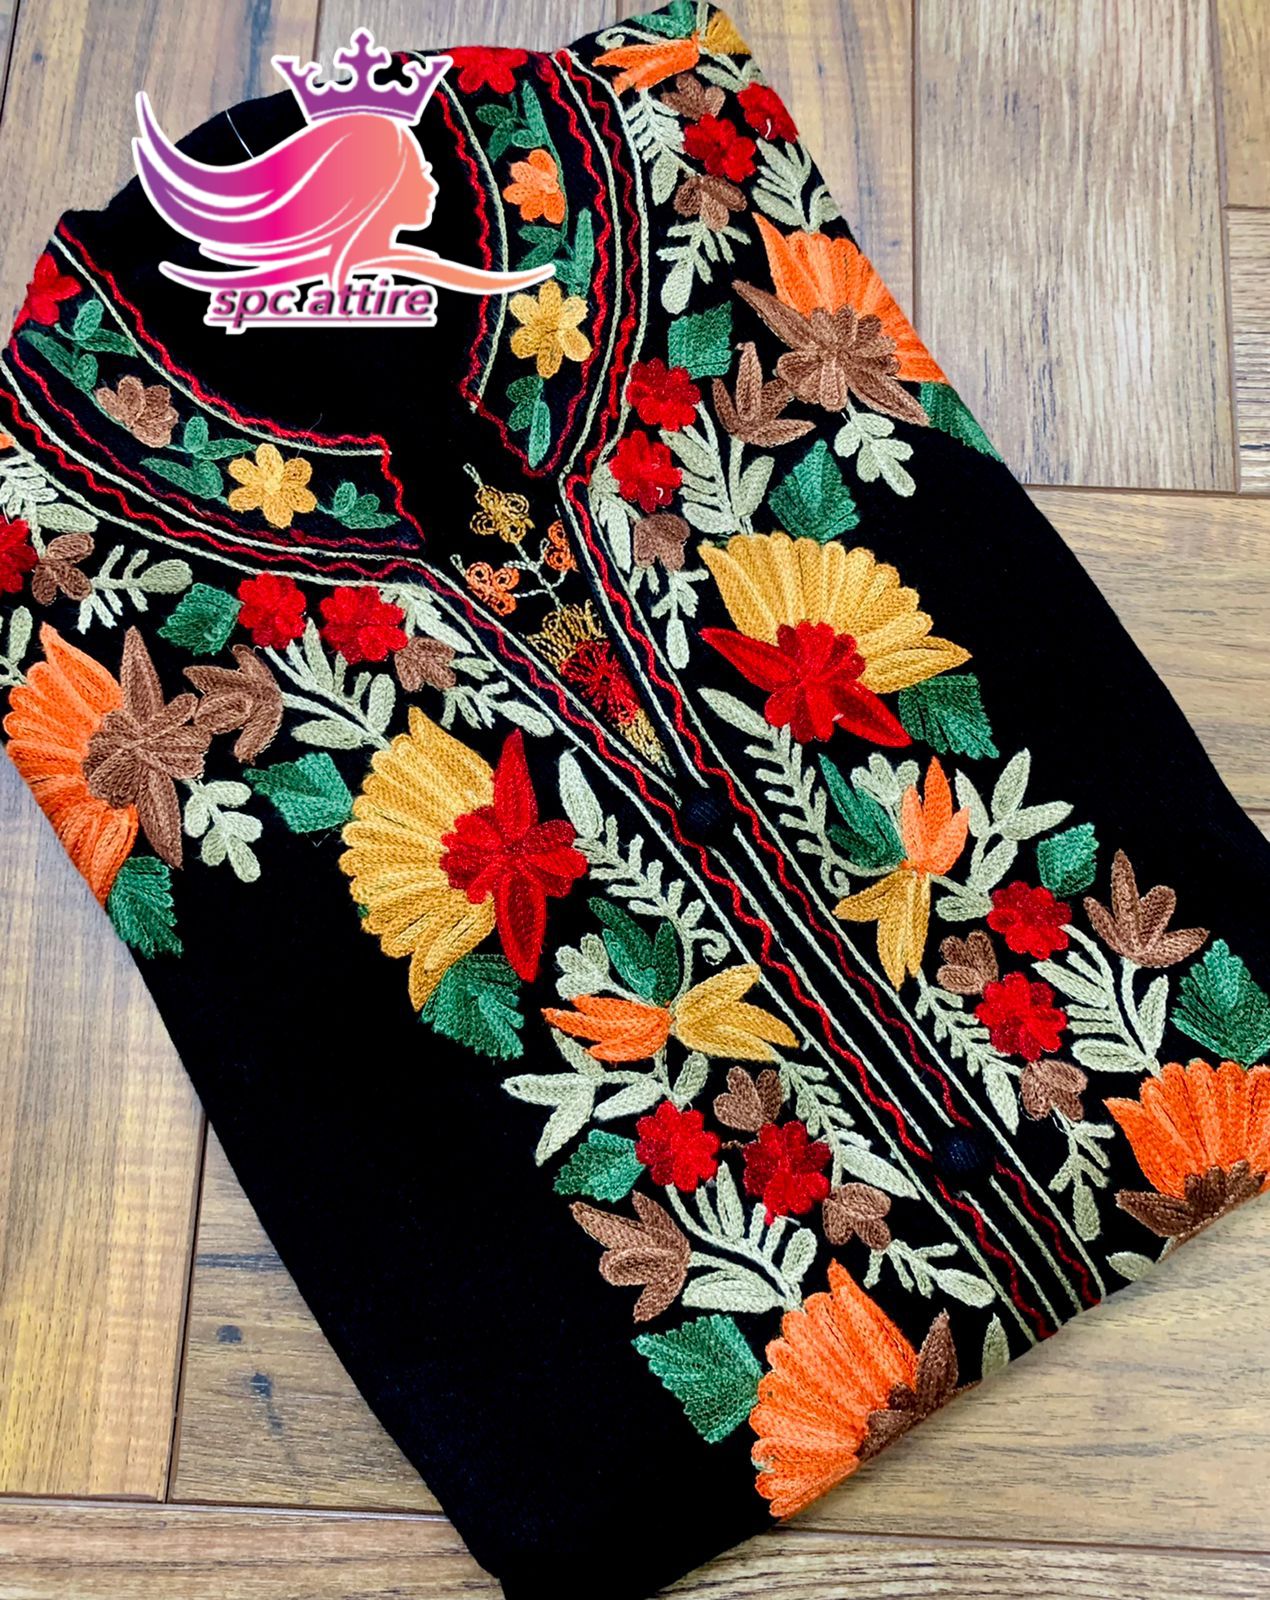 Buy Lasoon Women's Woolen Sweater (Pink, Large) at Amazon.in